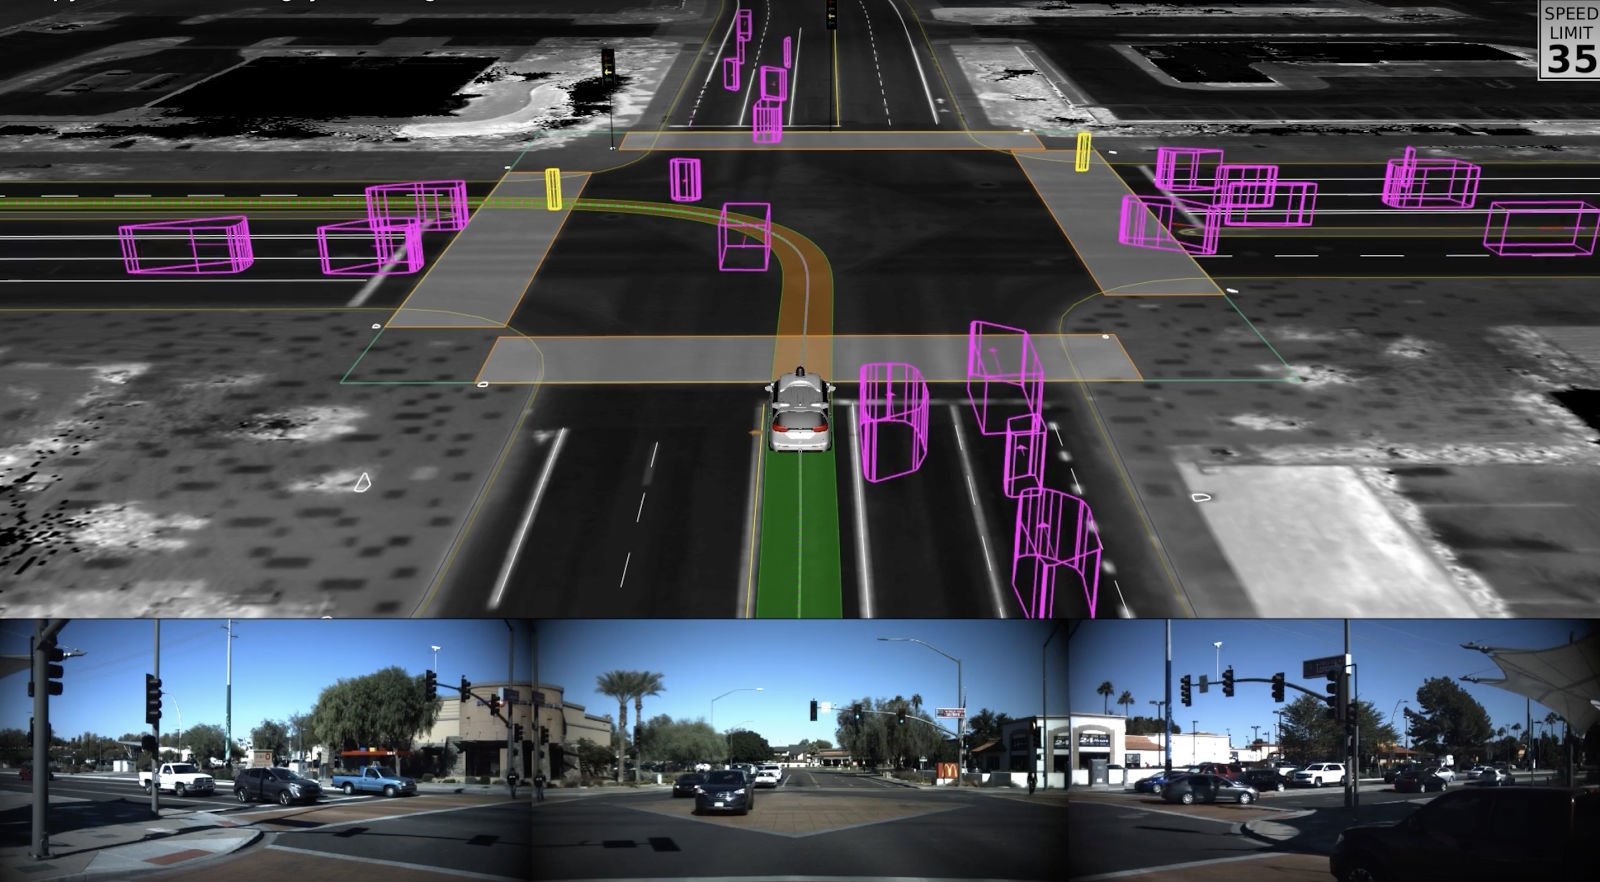 Waymo simulation is teaching self-driving cars invaluable skills | DeviceDaily.com